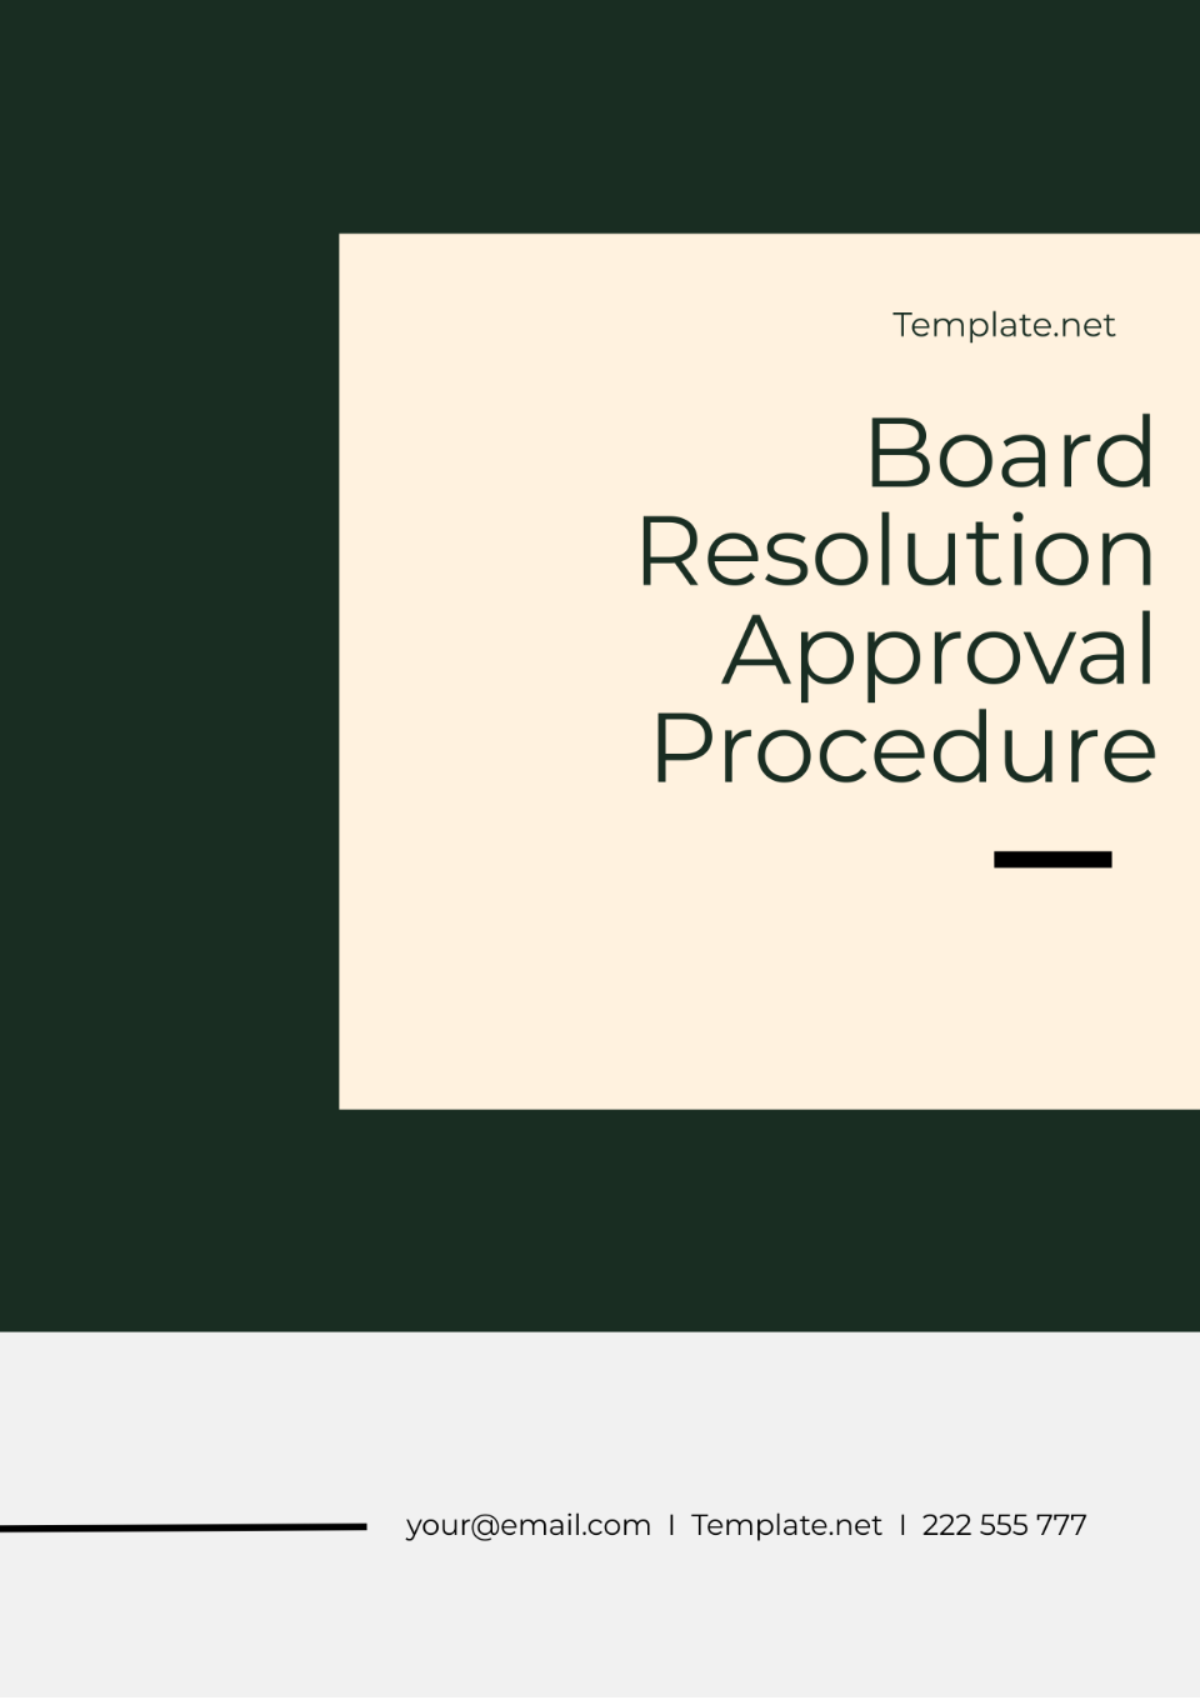 Board Resolution Approval Procedure Template